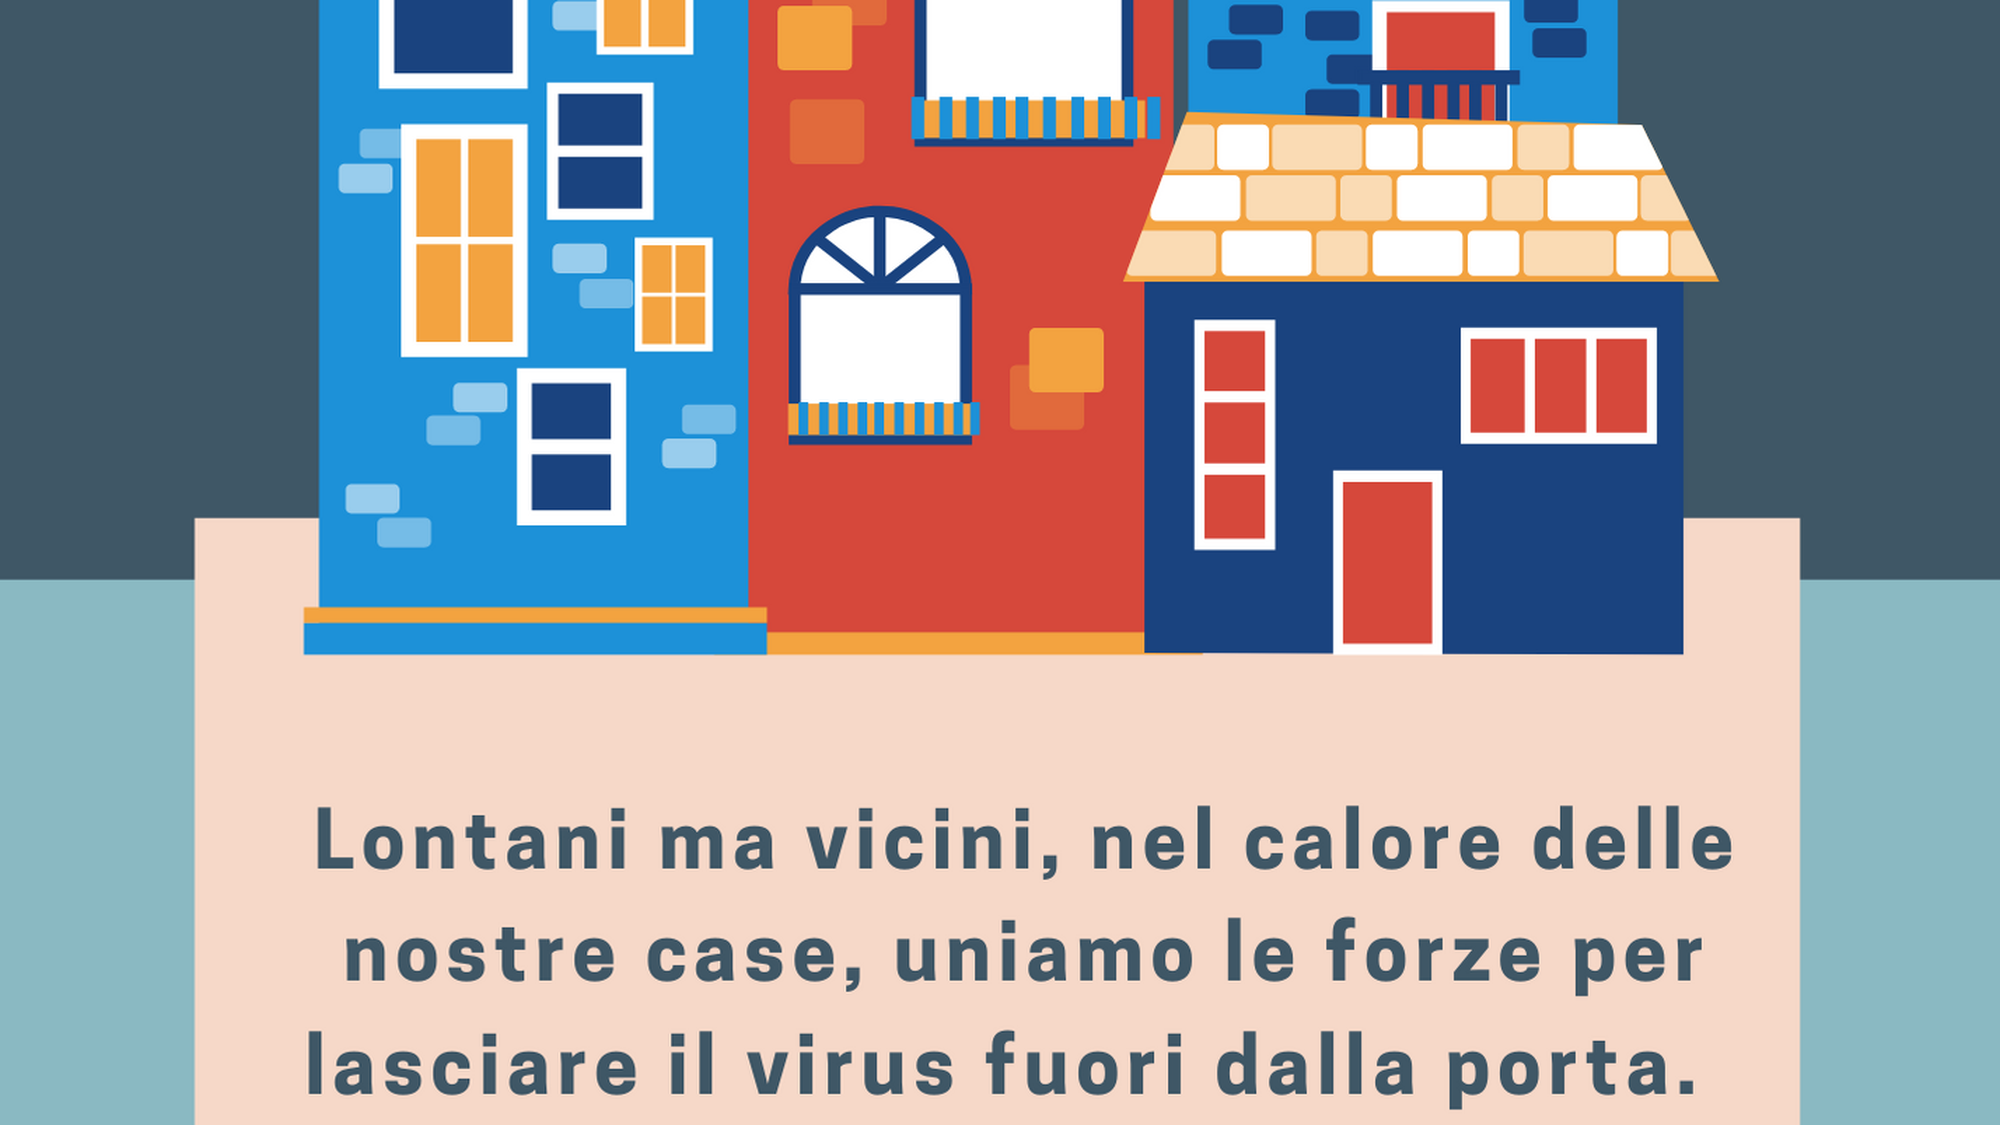 Facebook campaign #iorestoacasa by the Embassy of Switzerland to Italy, Malta and San Marino